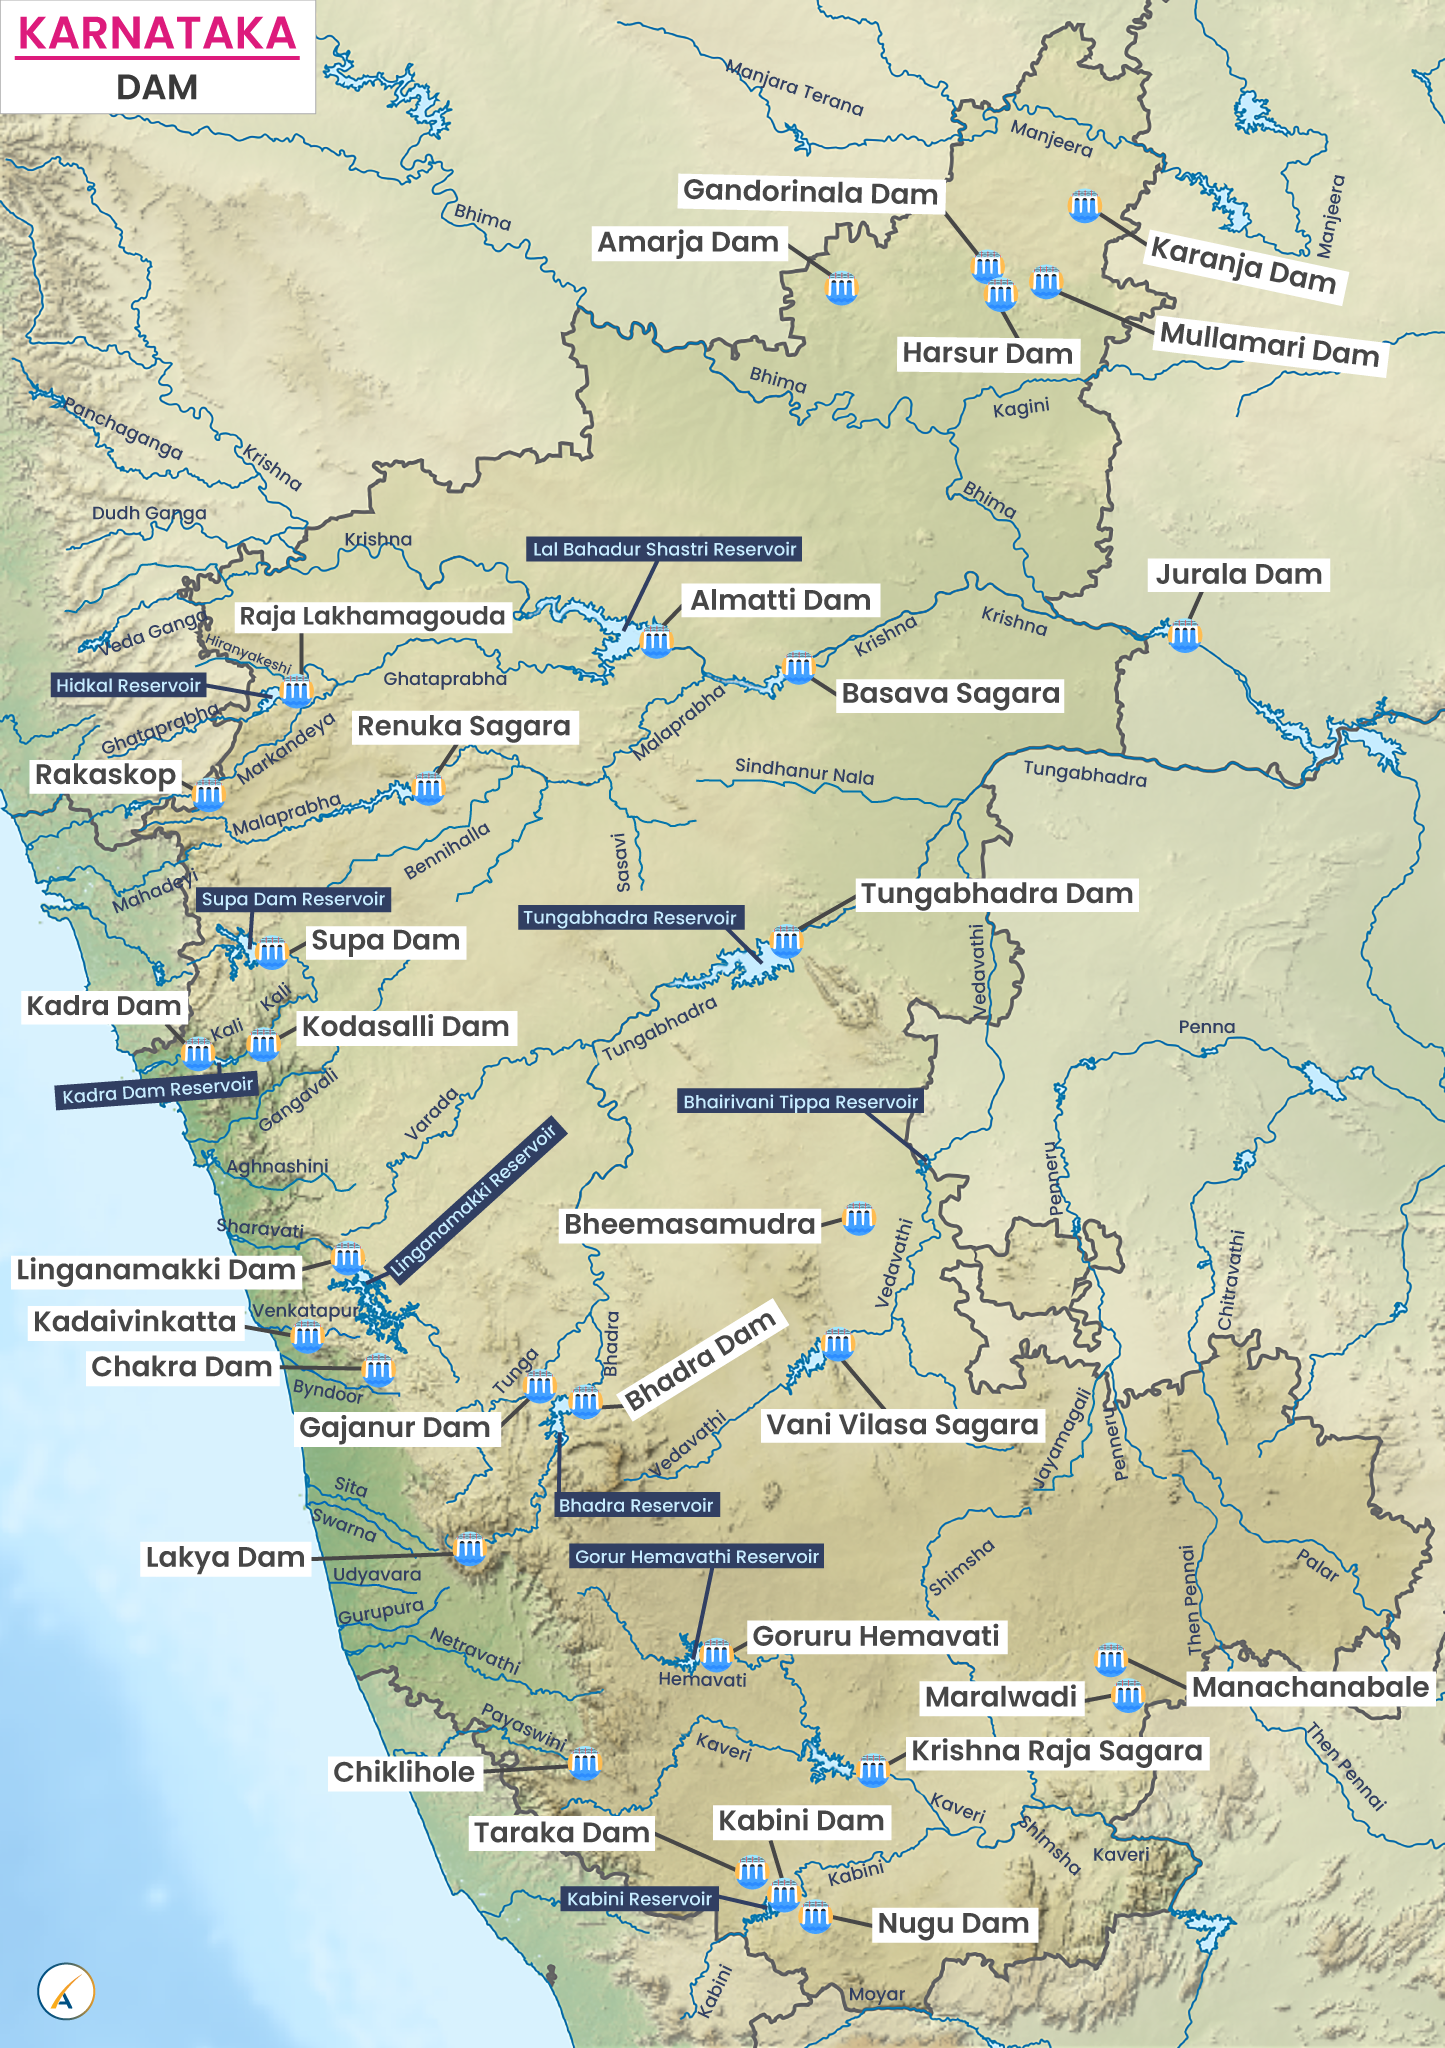 Major Dams in Karnataka